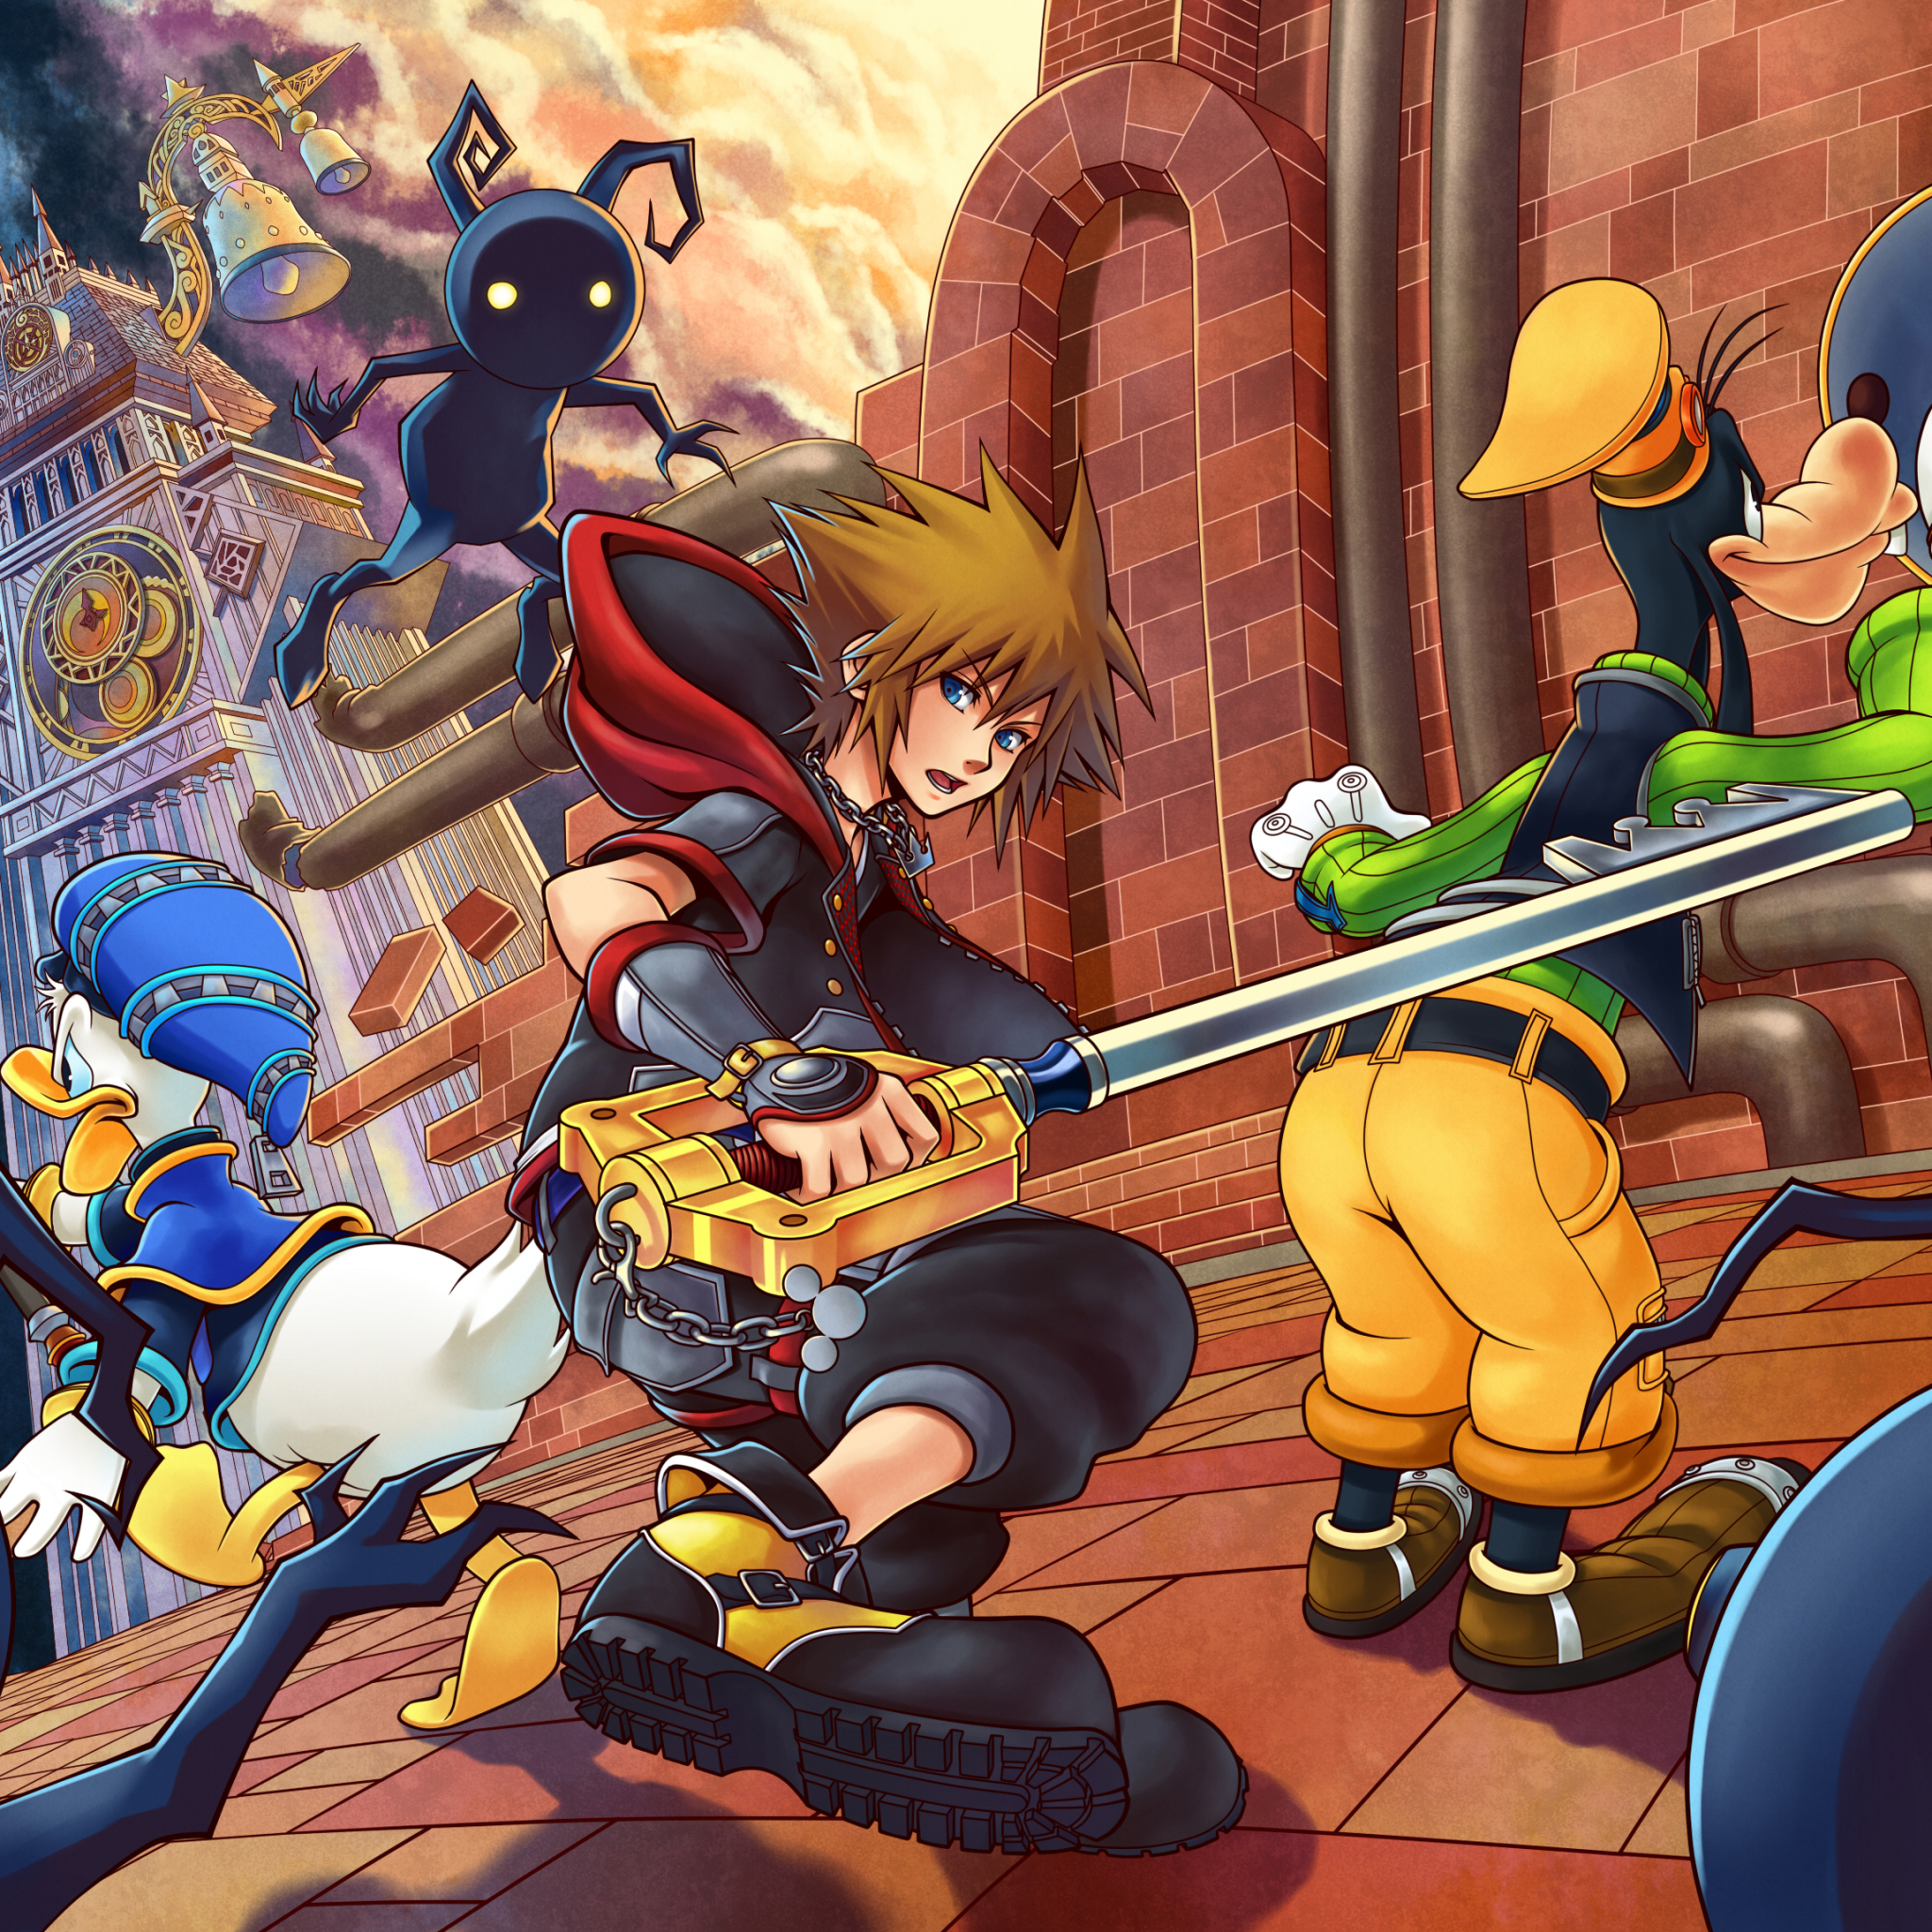 Kingdom Hearts III Pfp by BLEACHIST